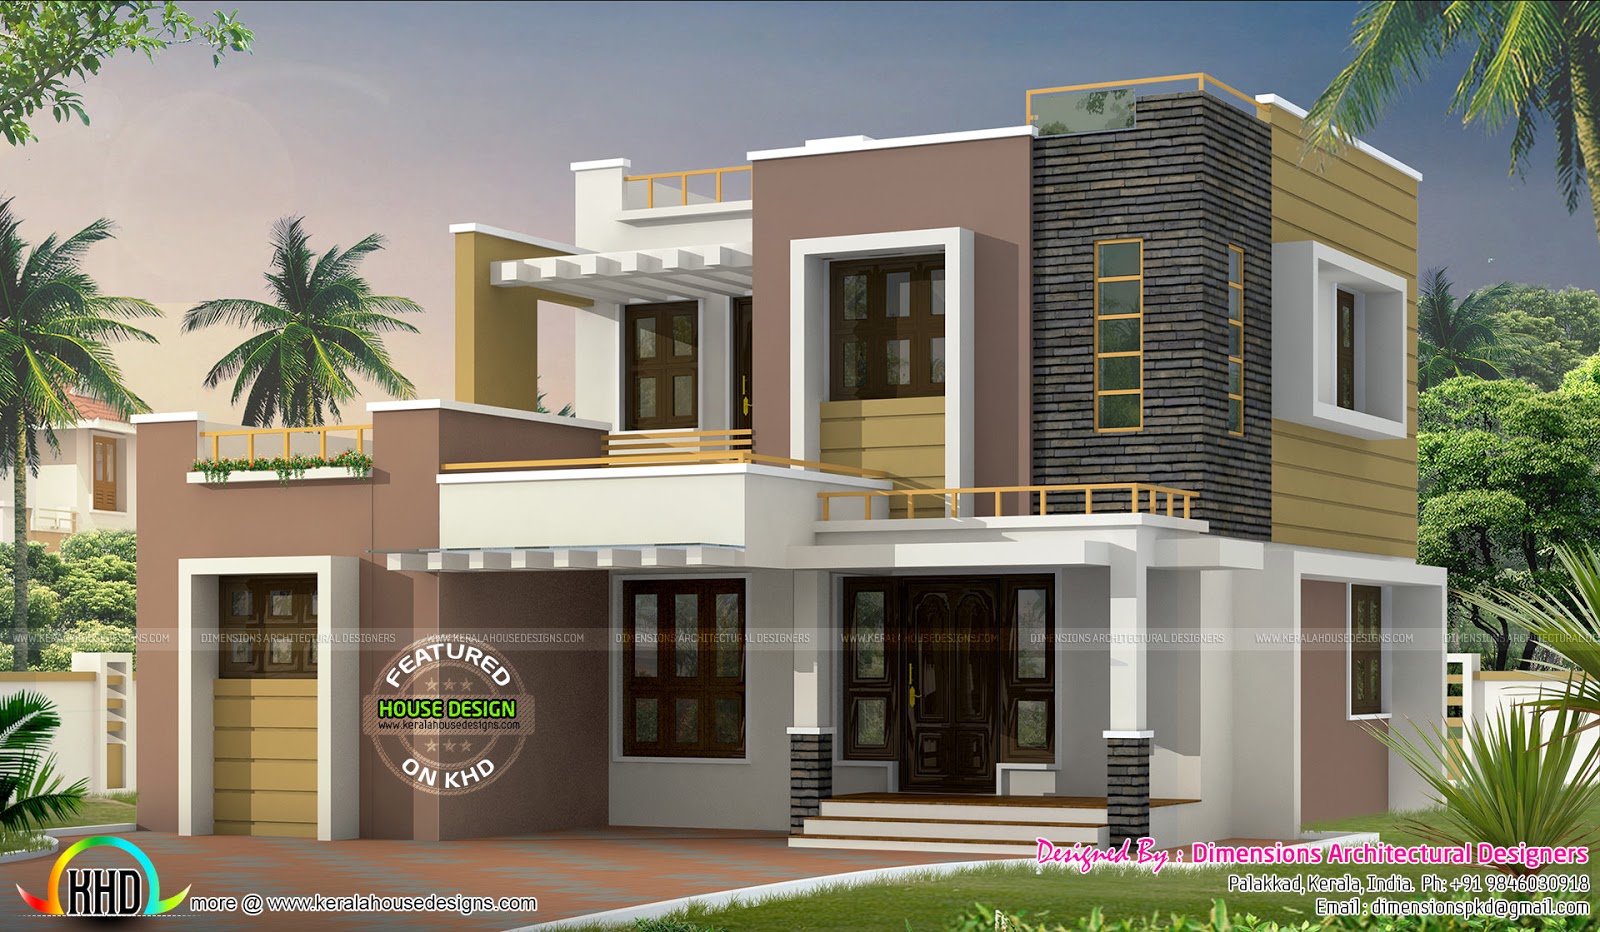  1500  sq  ft  contemporary home  Kerala  home  design and 